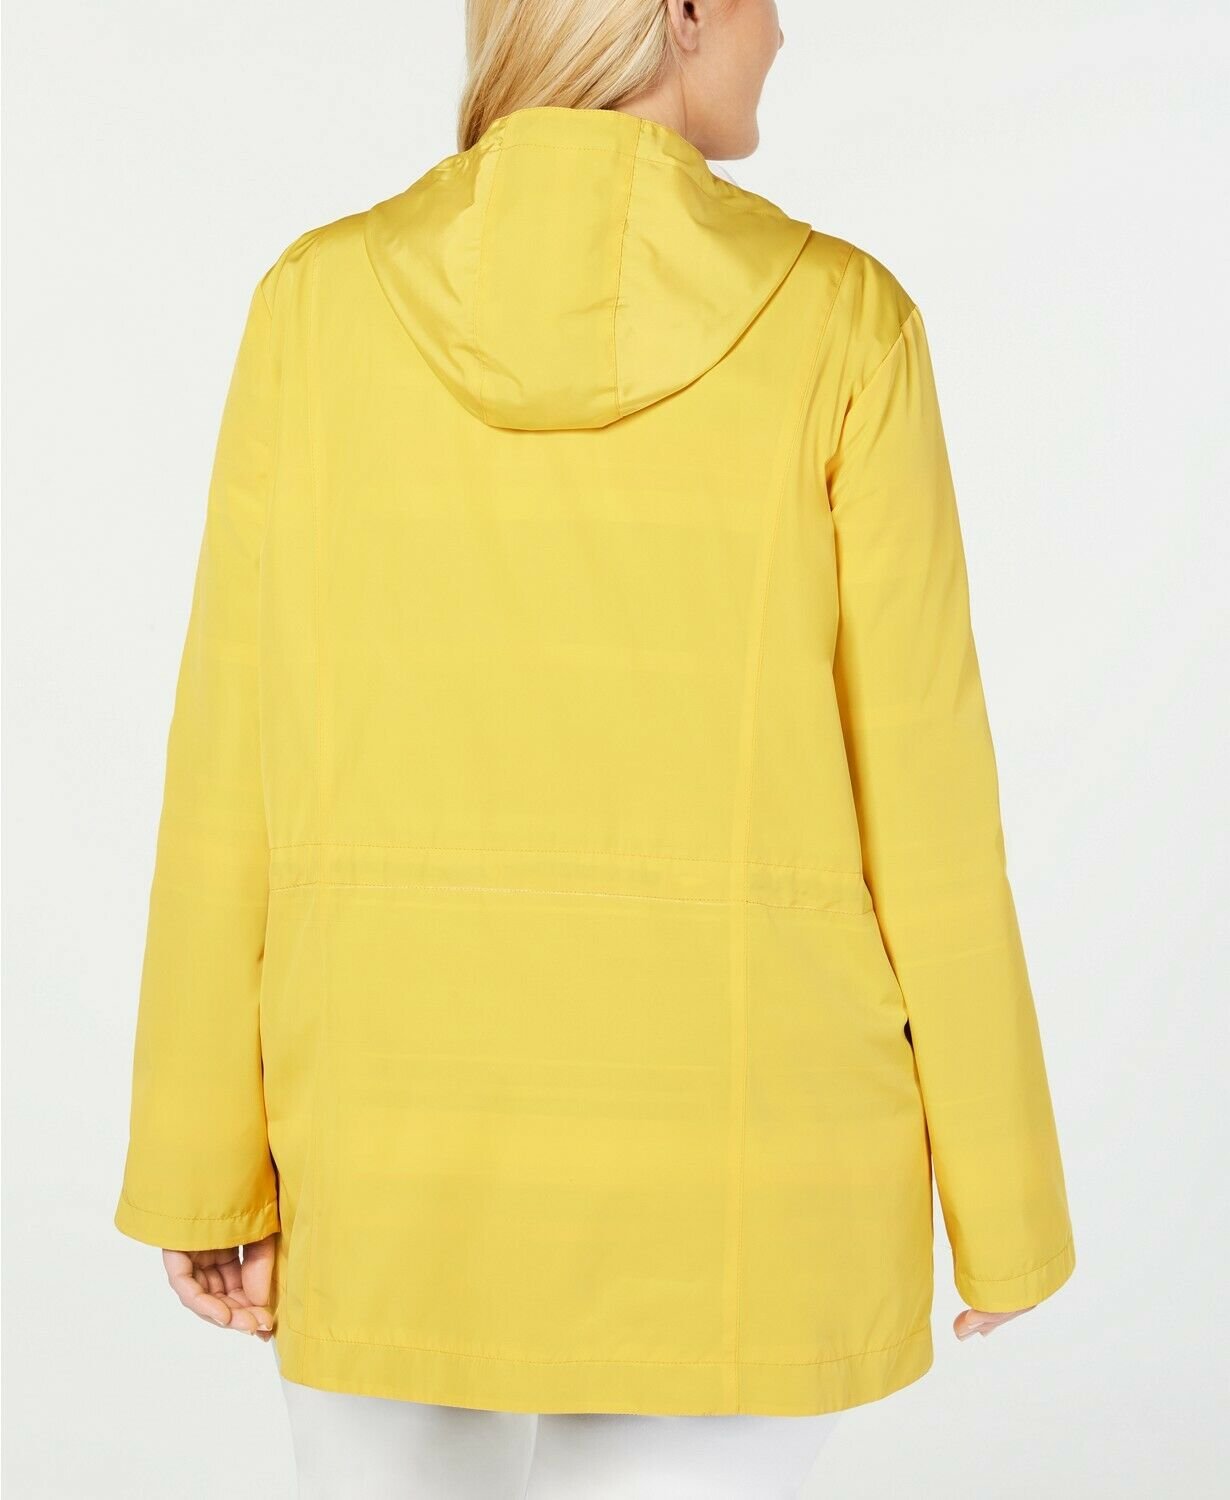 Charter Club Women's Plus Reversible Jacket  Yellow Size Extra Large - image 2 of 3